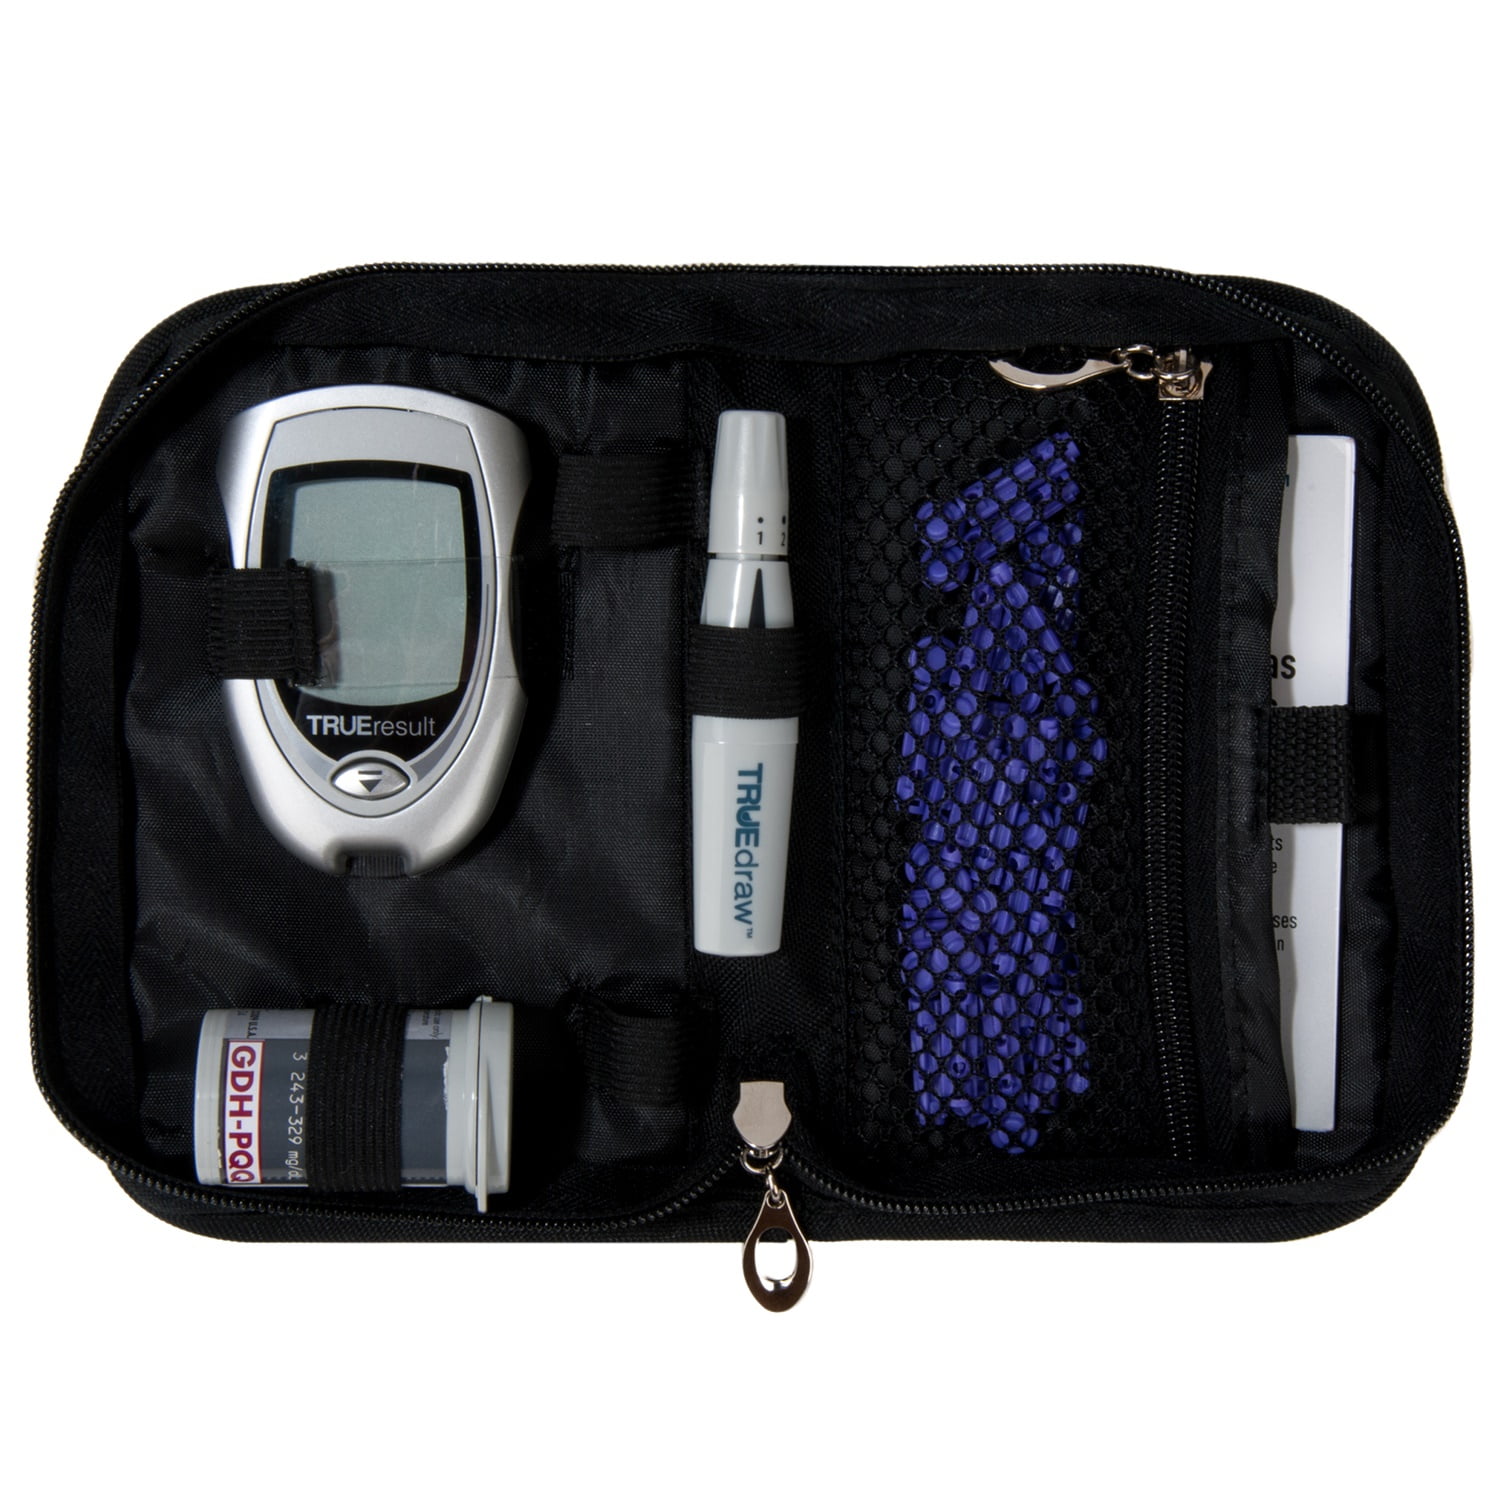  Medicool DIA-PAK Deluxe Diabetic Supply Organizer 1 Each :  Health & Household